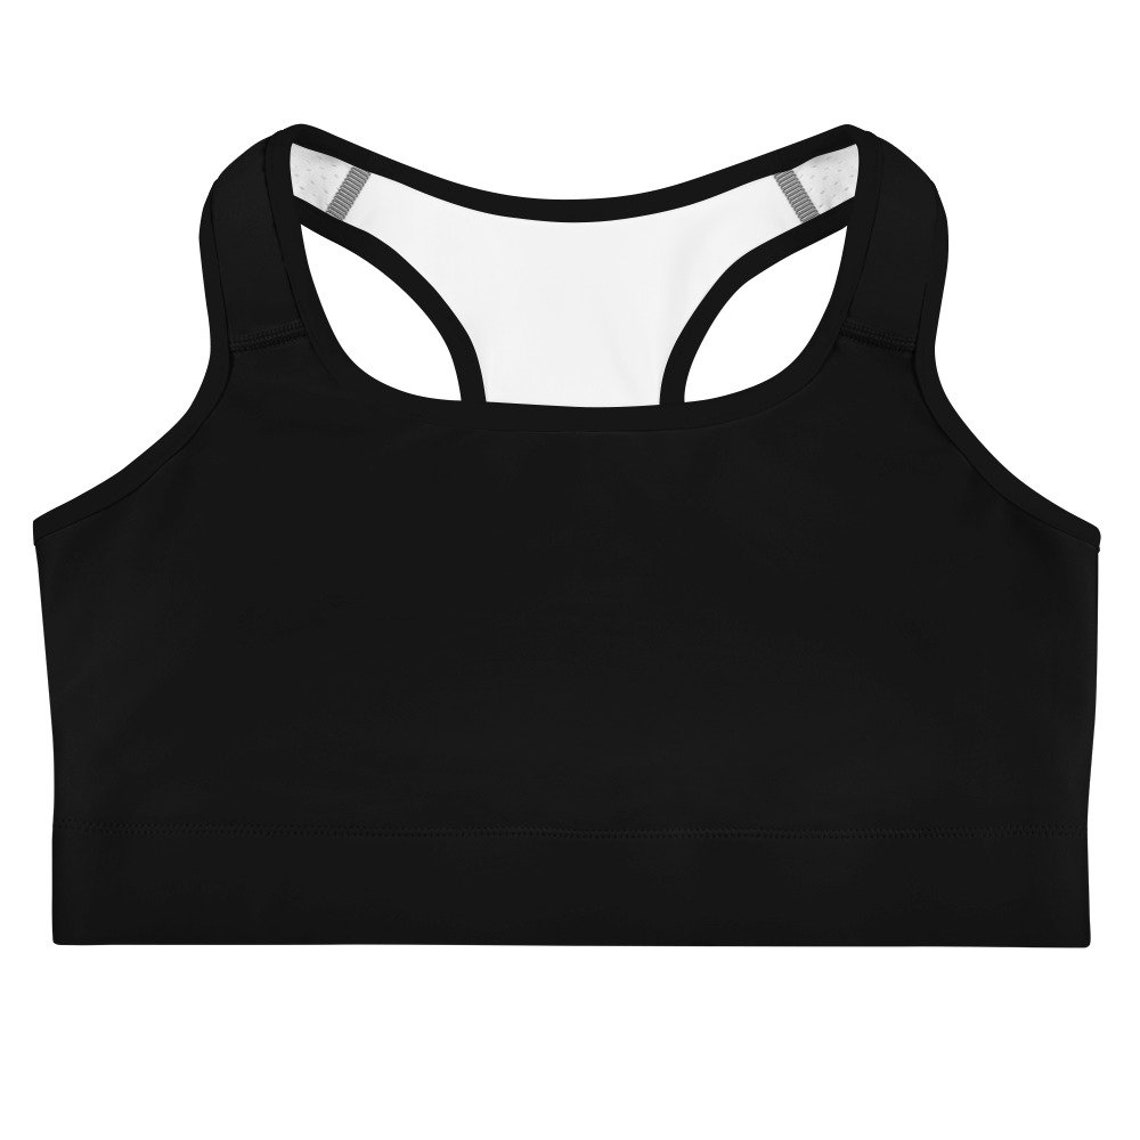 Winter Solstice Sports Bra/plain black sports bra for yoga and | Etsy